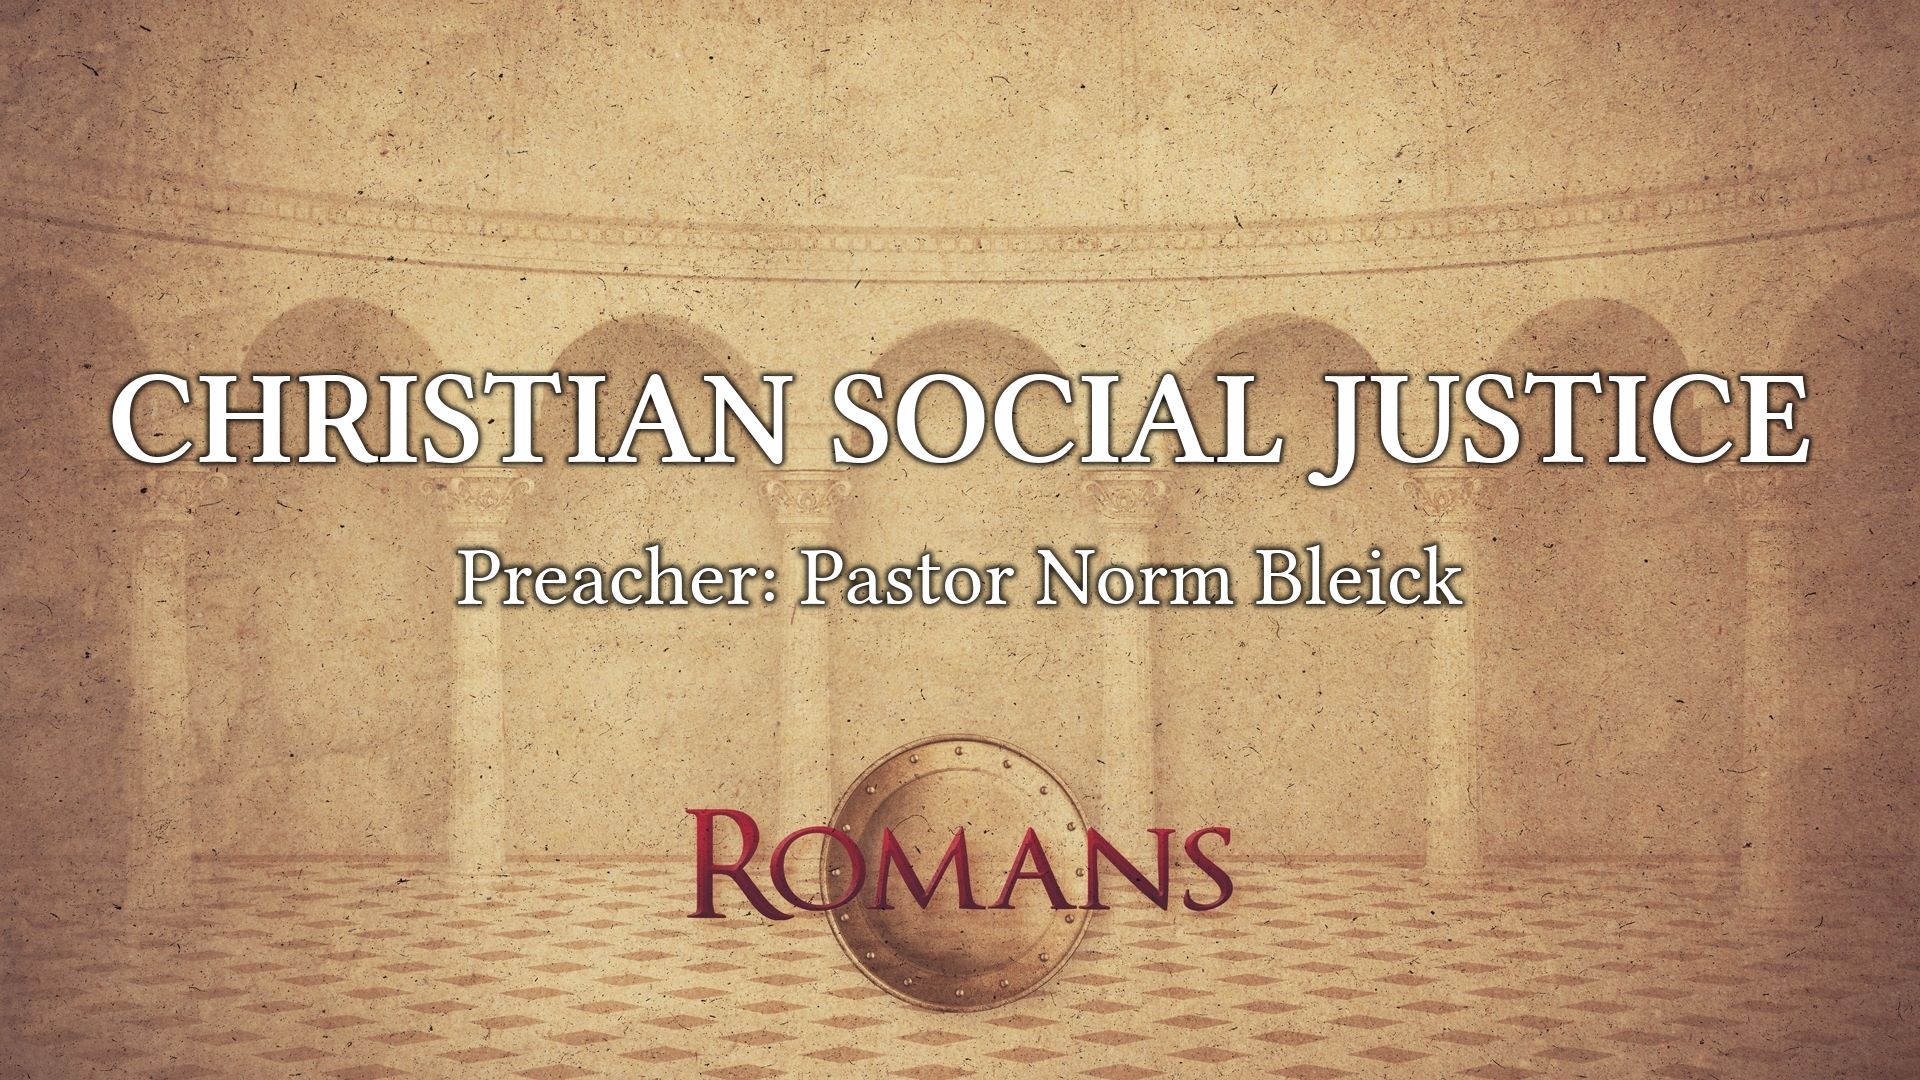 Christian Social Justice